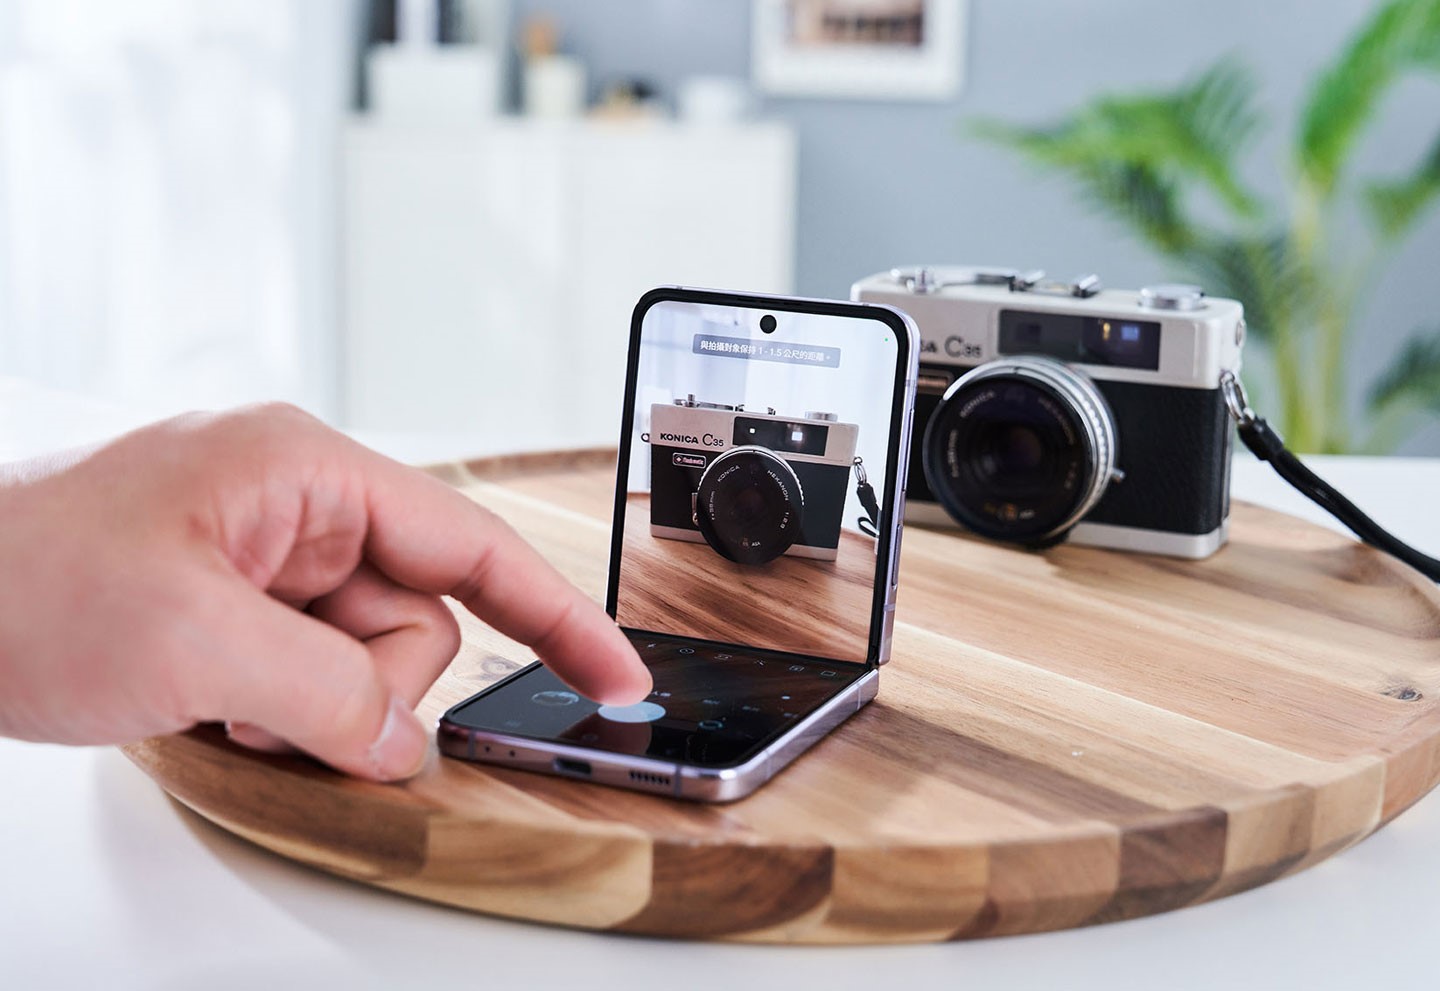 Galaxy Z Flip4 同樣有便利的 Flex 模式，可以輕鬆將手機架立在桌面上操作，或是在拍照時將鏡彎摺至適合的角度取景，為影像創作增添更多彈性！